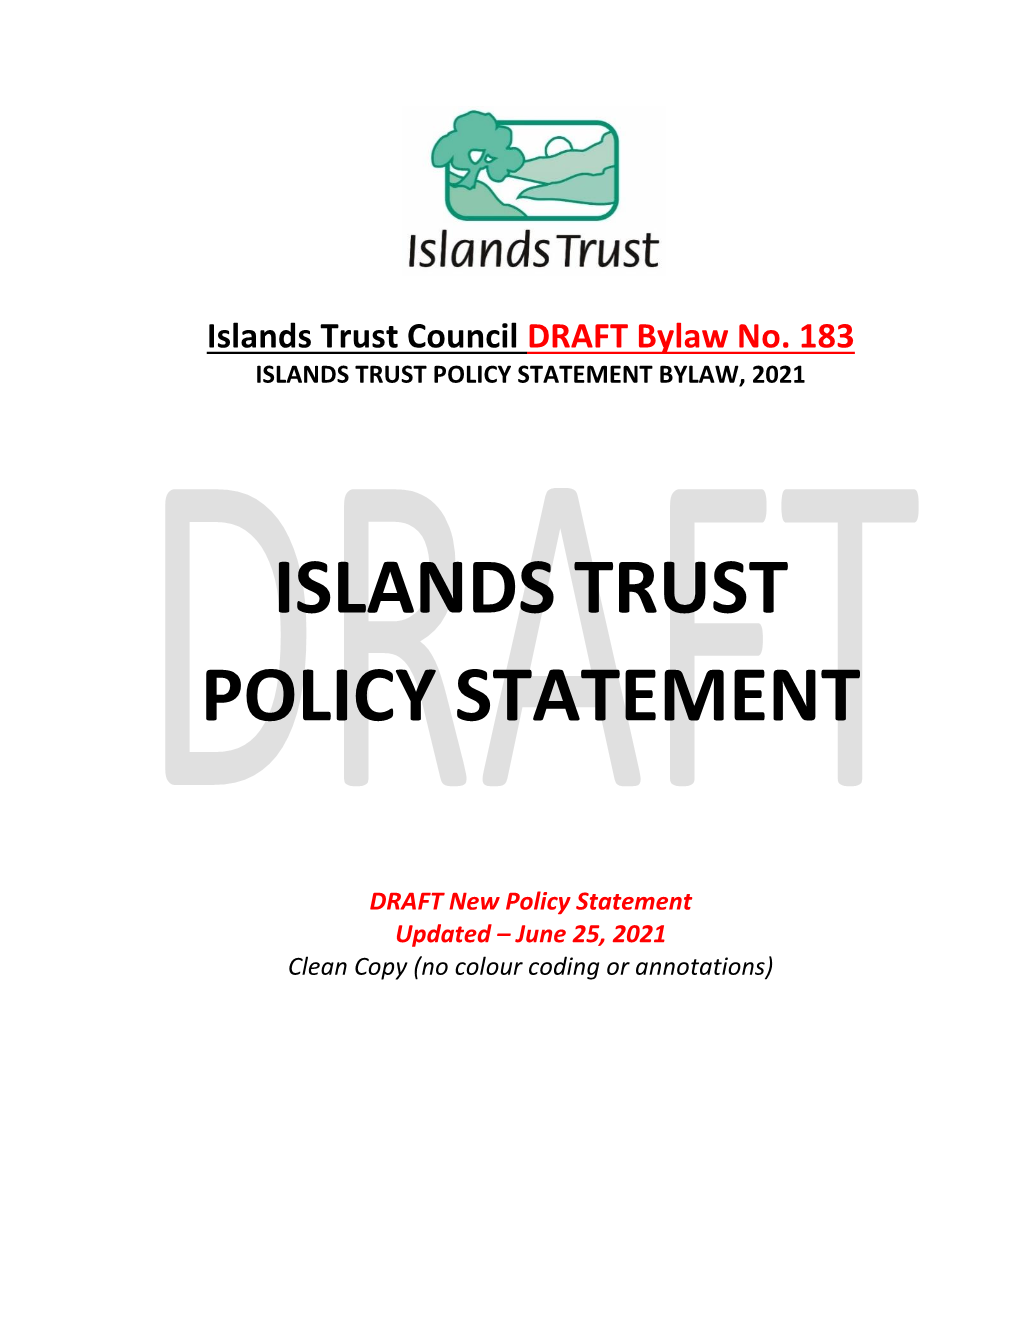 Islands Trust Policy Statement Bylaw, 2021